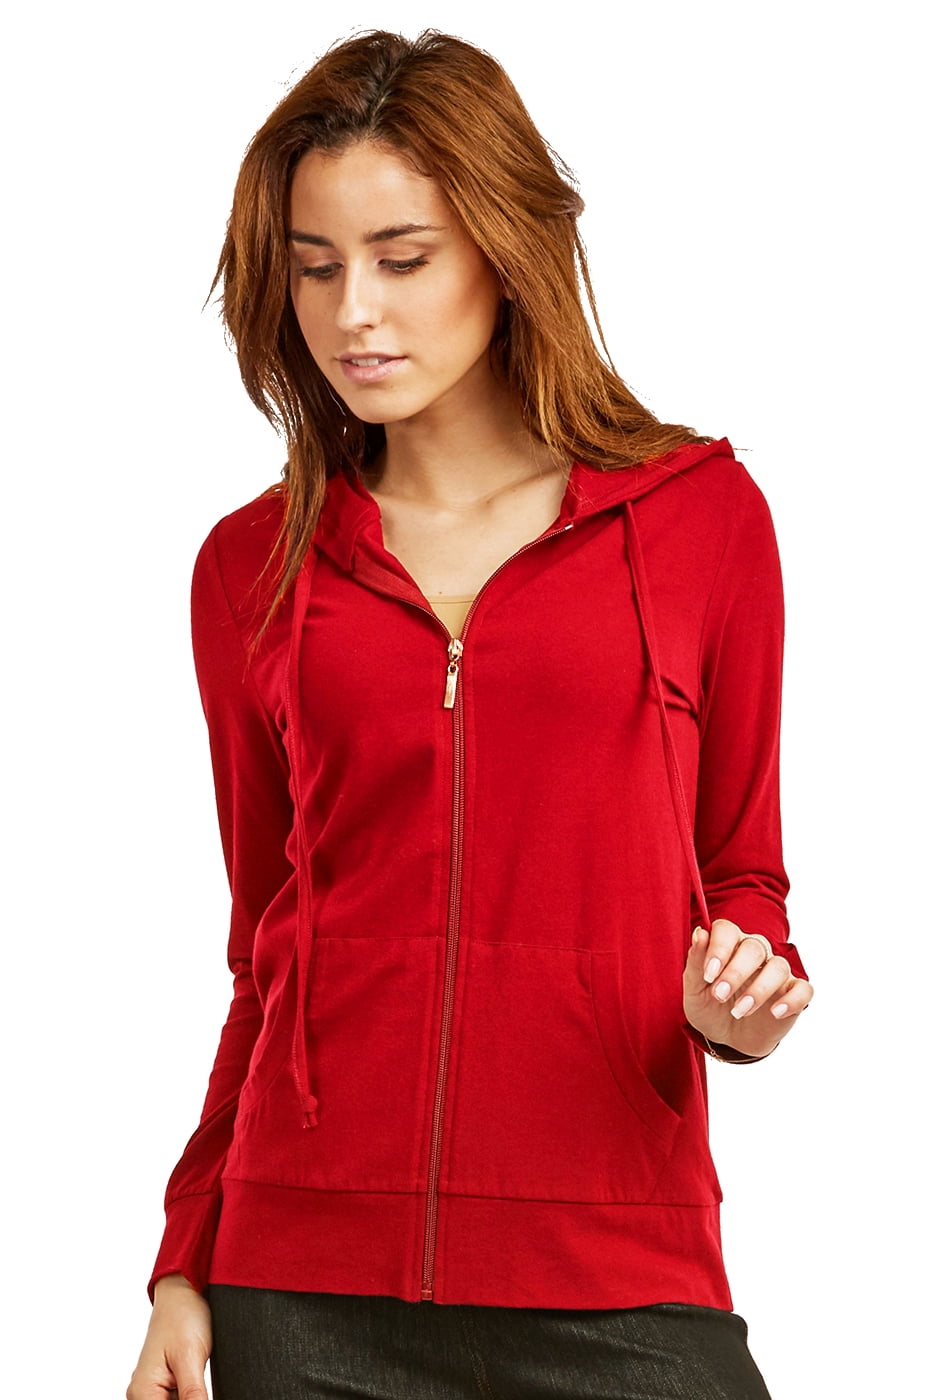 Sofra - Women's Thin Cotton Zip Up Hoodie Jacket (M, Red) - Walmart.com